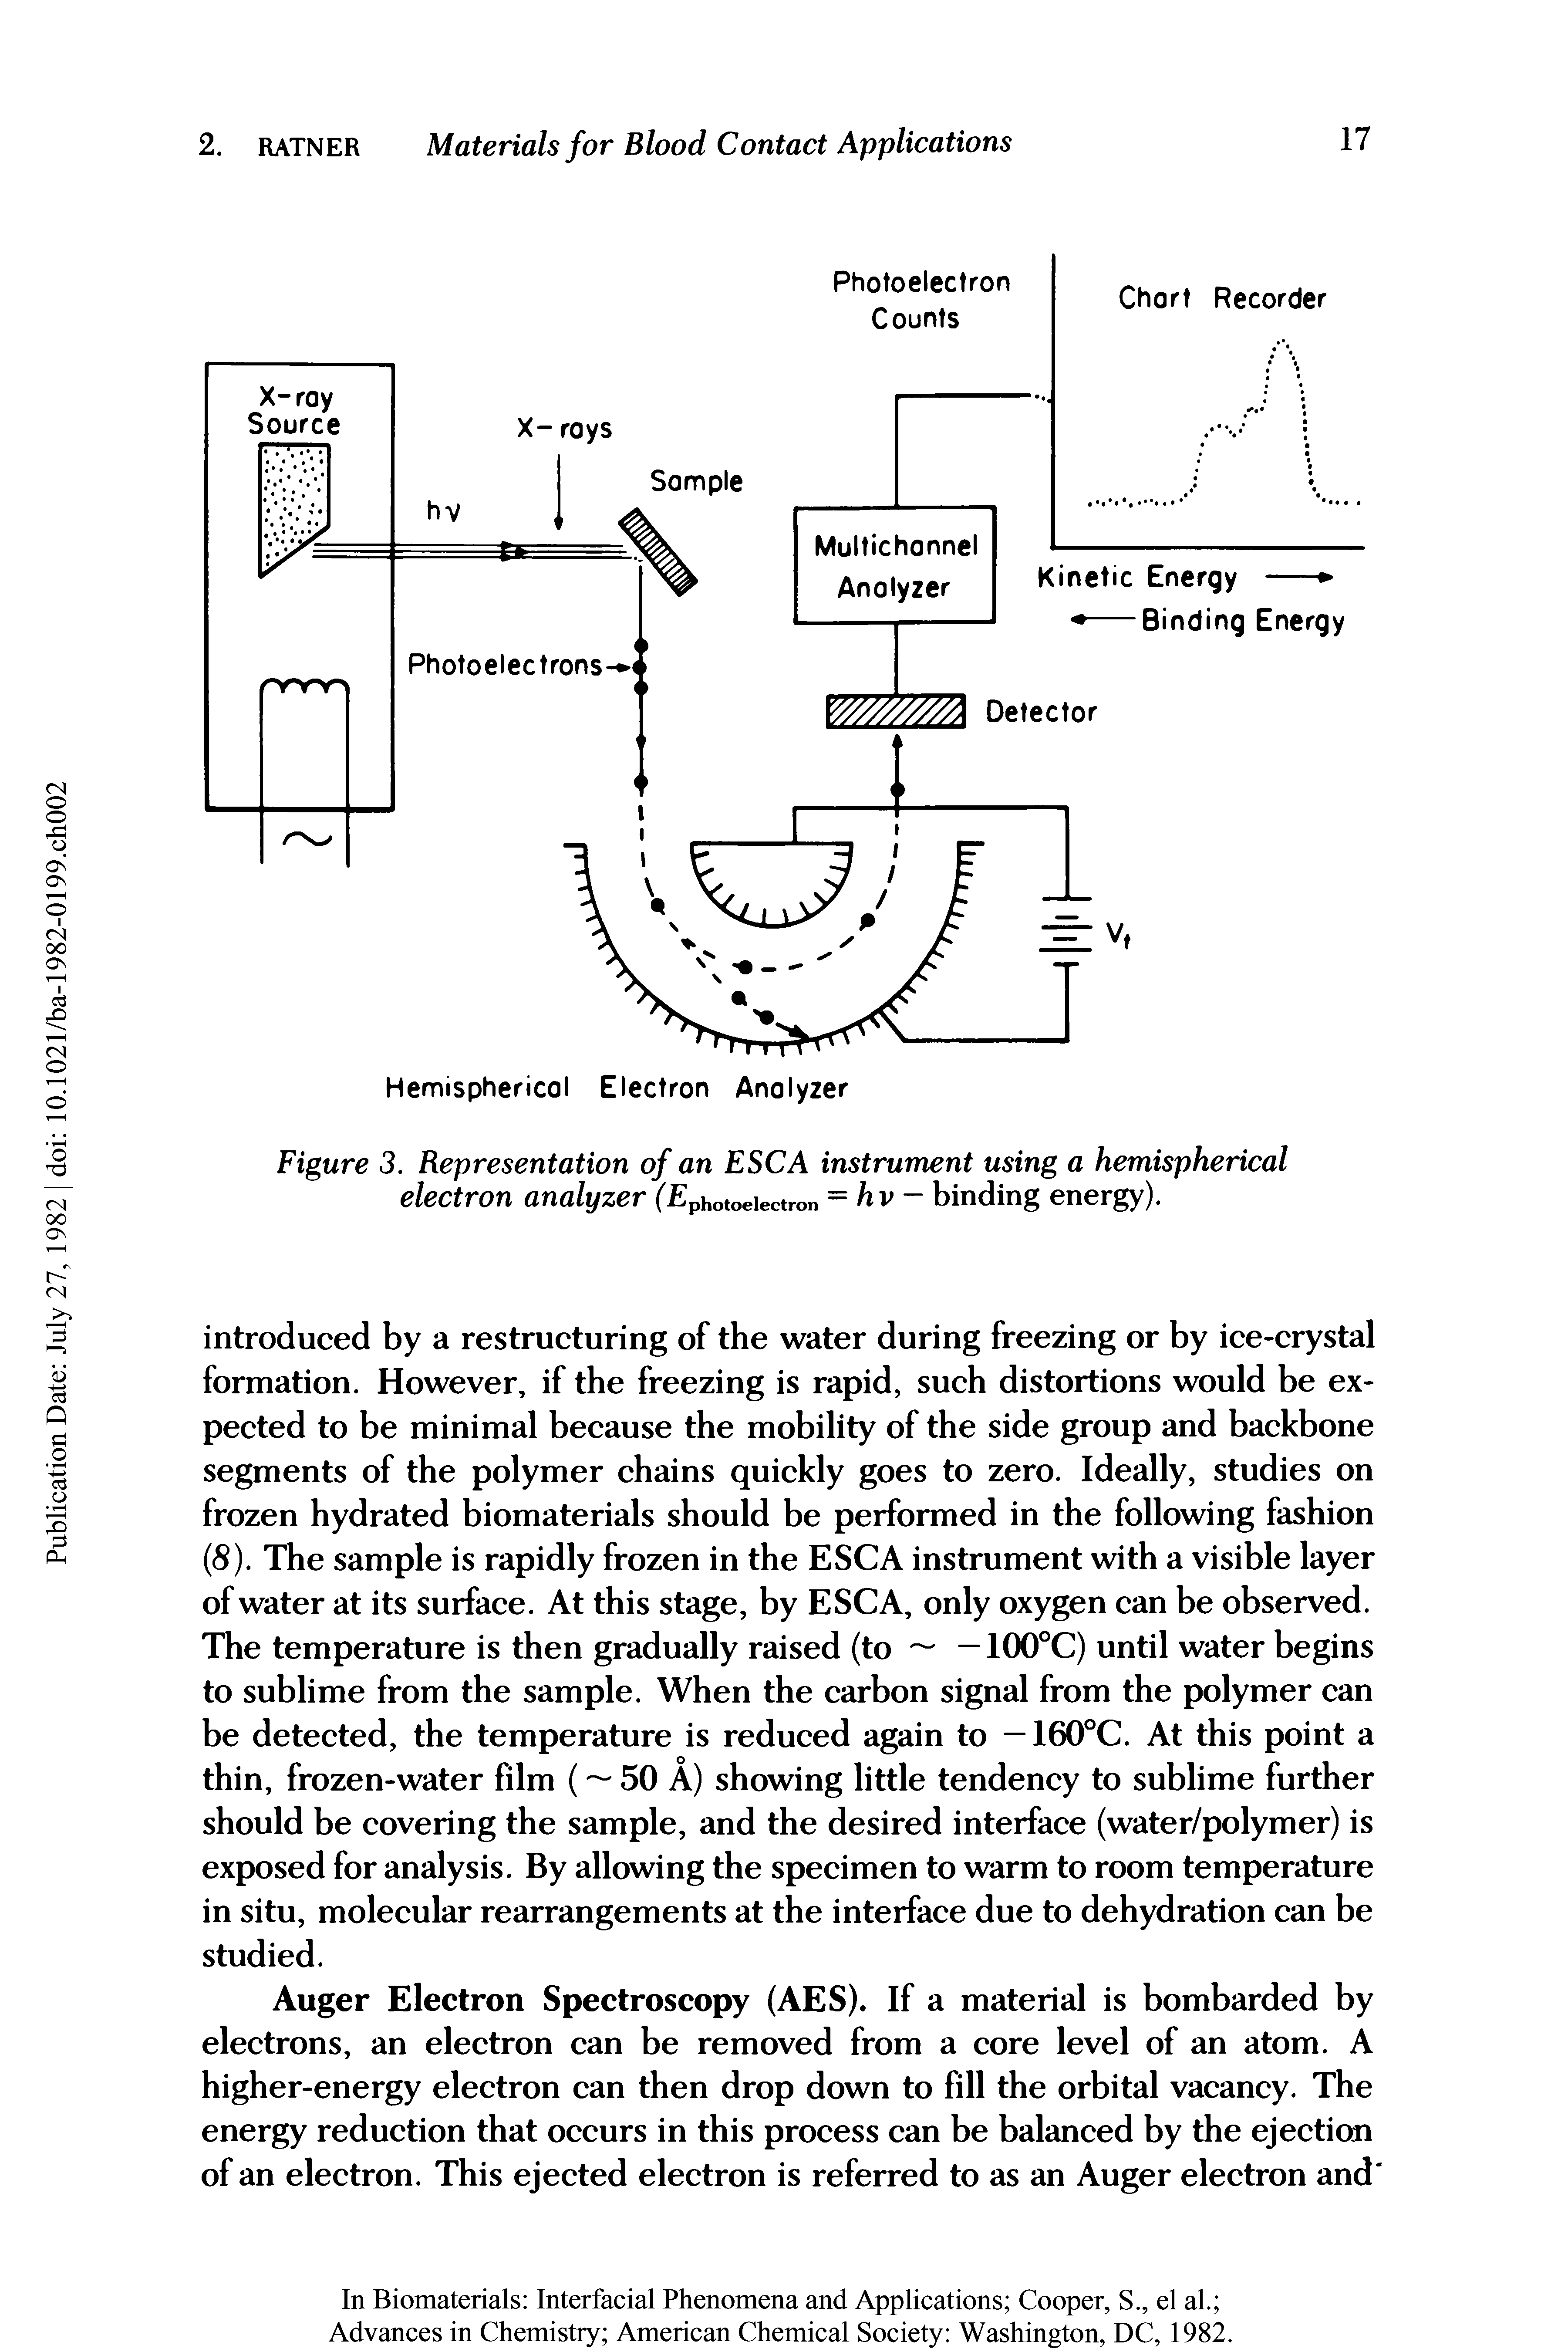 Figure 3. Representation of an ESC A instrument using a hemispherical electron analyzer (Ephotoe ectron = hv — binding energy).